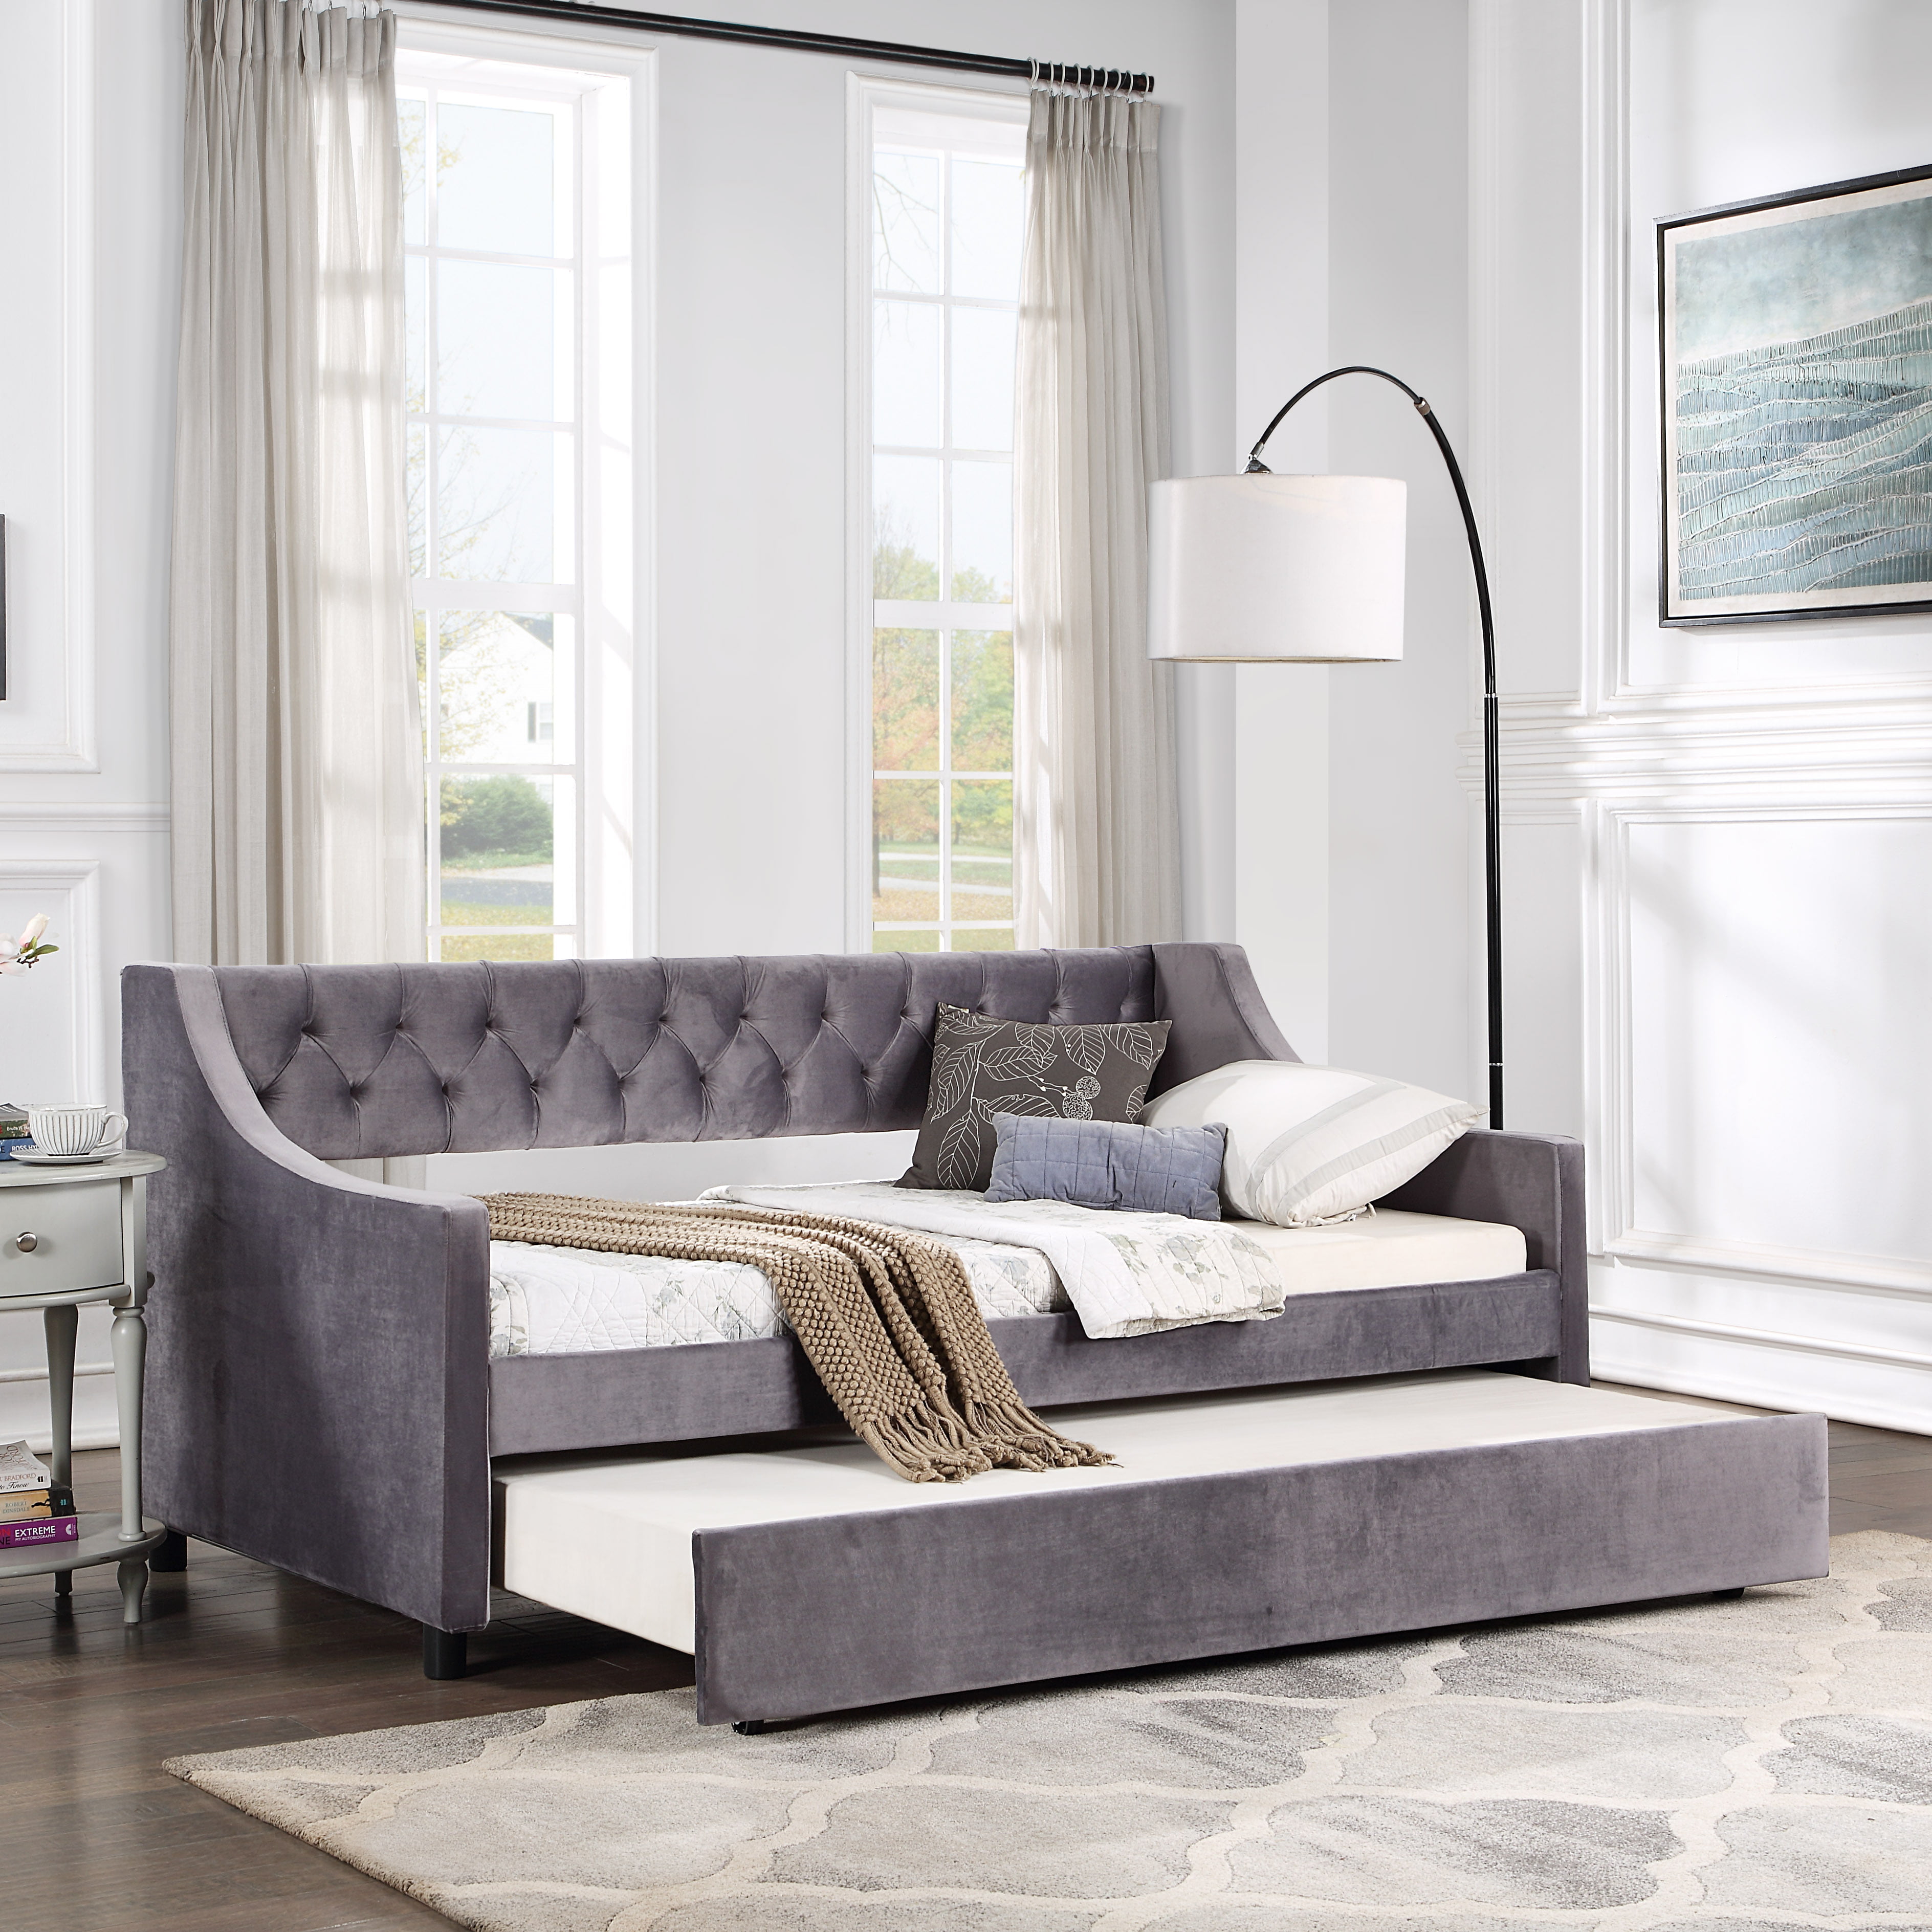 Shunda K Upholstered Tufted Daybed Classic Style Sofa Bed Twin Dark Gray - Walmart.com